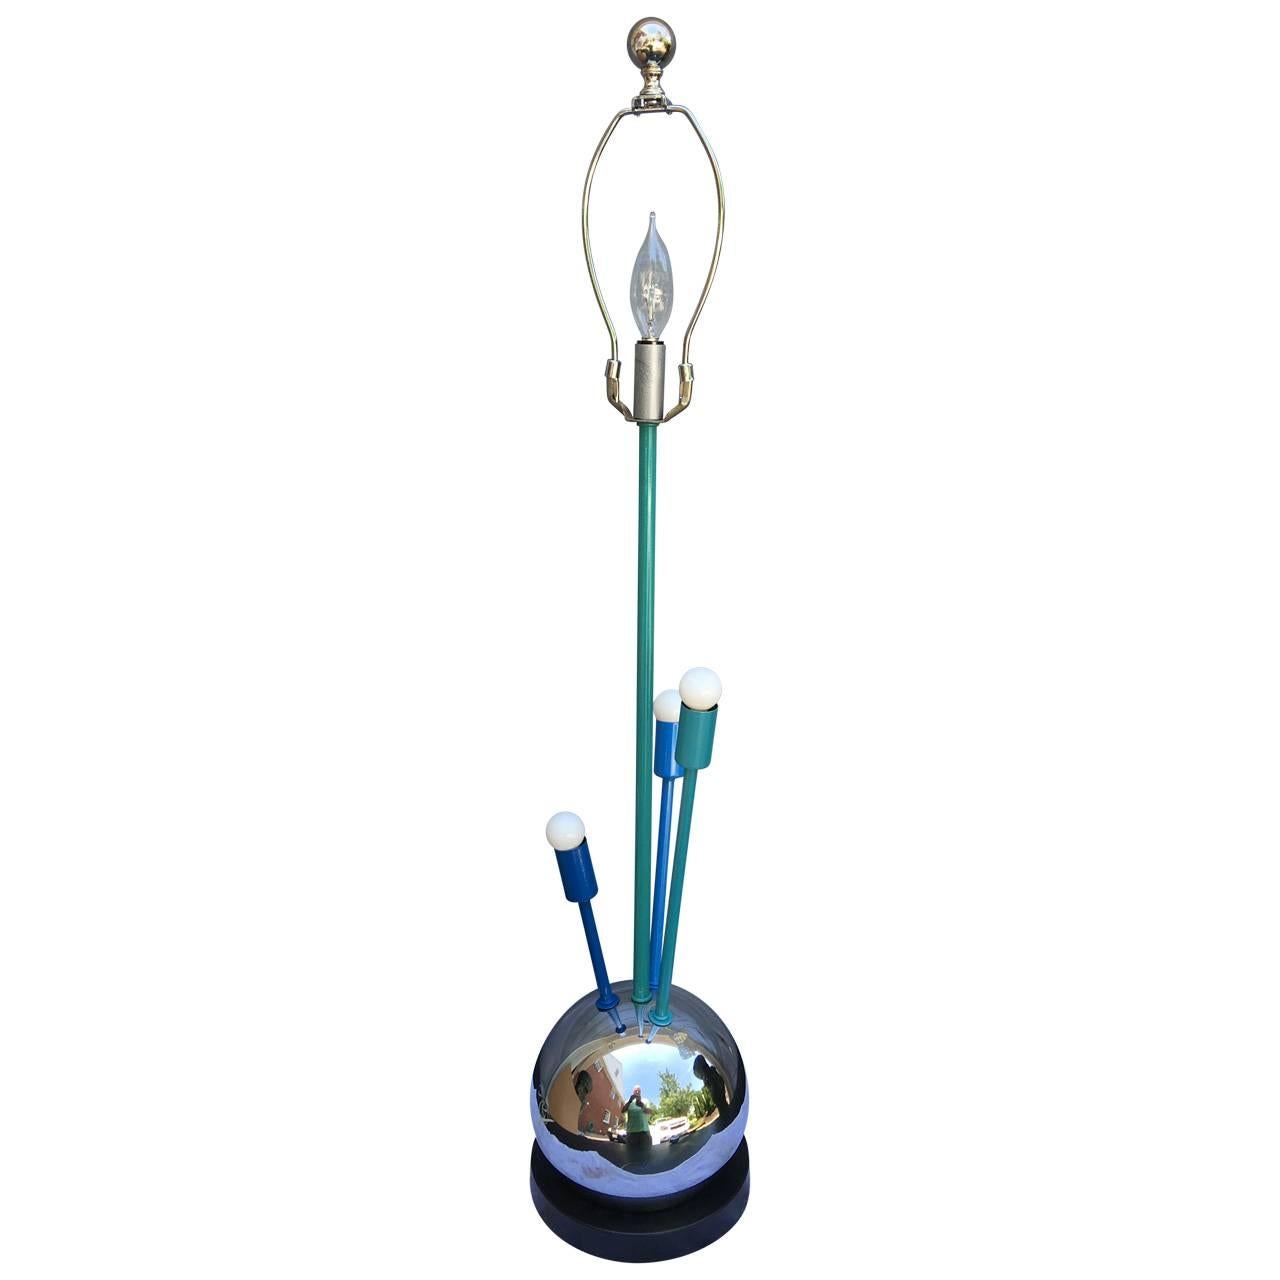 Powder-Coated Mid-Century Modern Atomic Age Sputnik Table Lamp